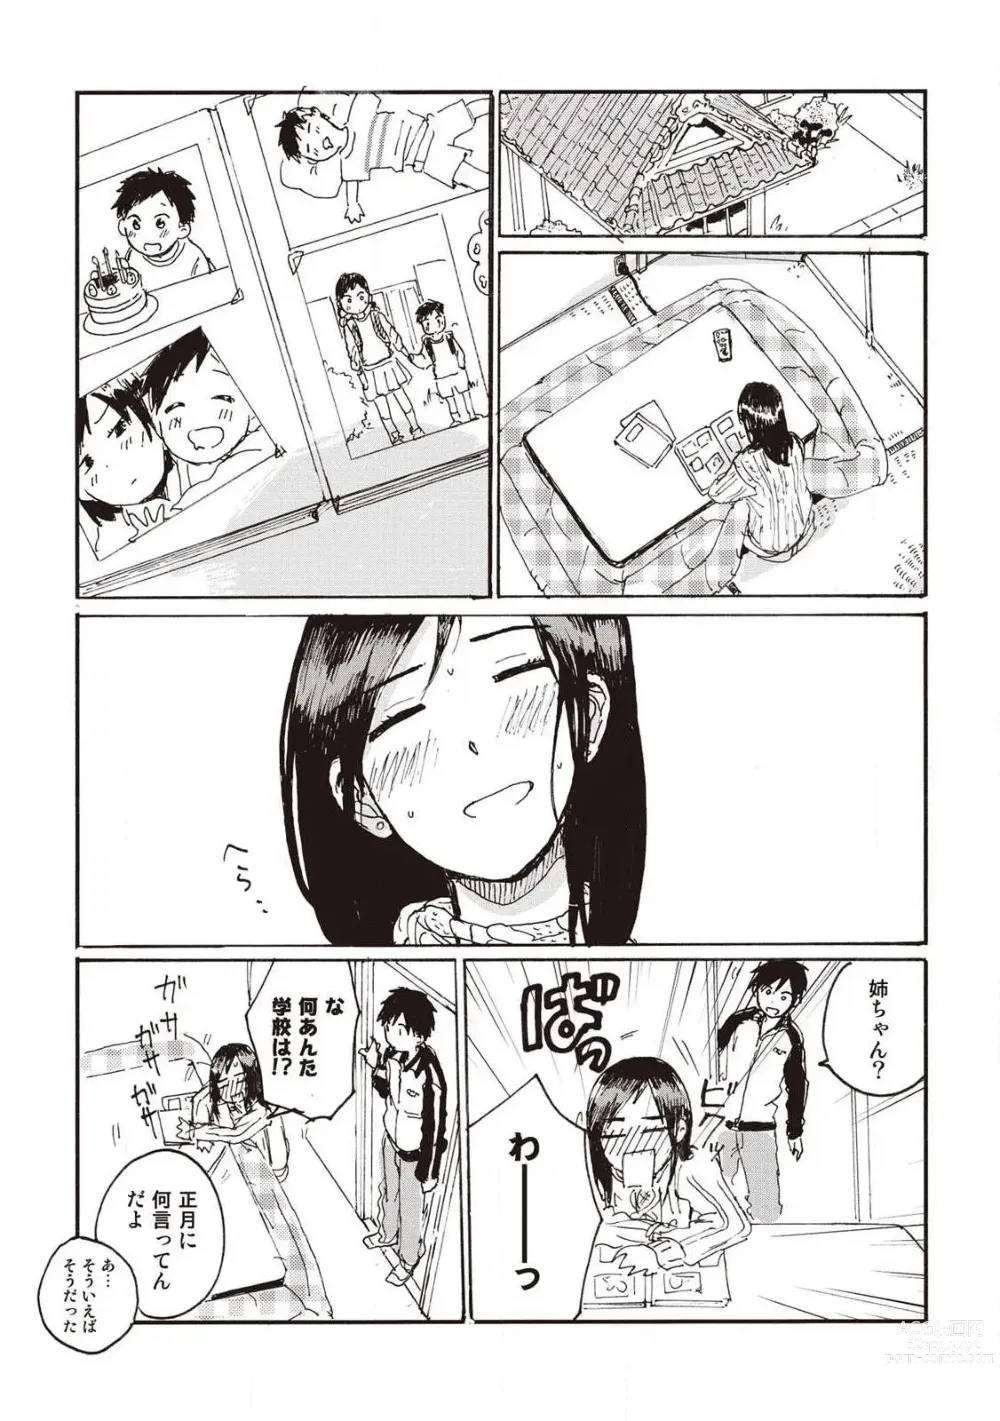 Page 172 of manga Hatomugi Batake de Tsukamaete - The Catcher in the Hato